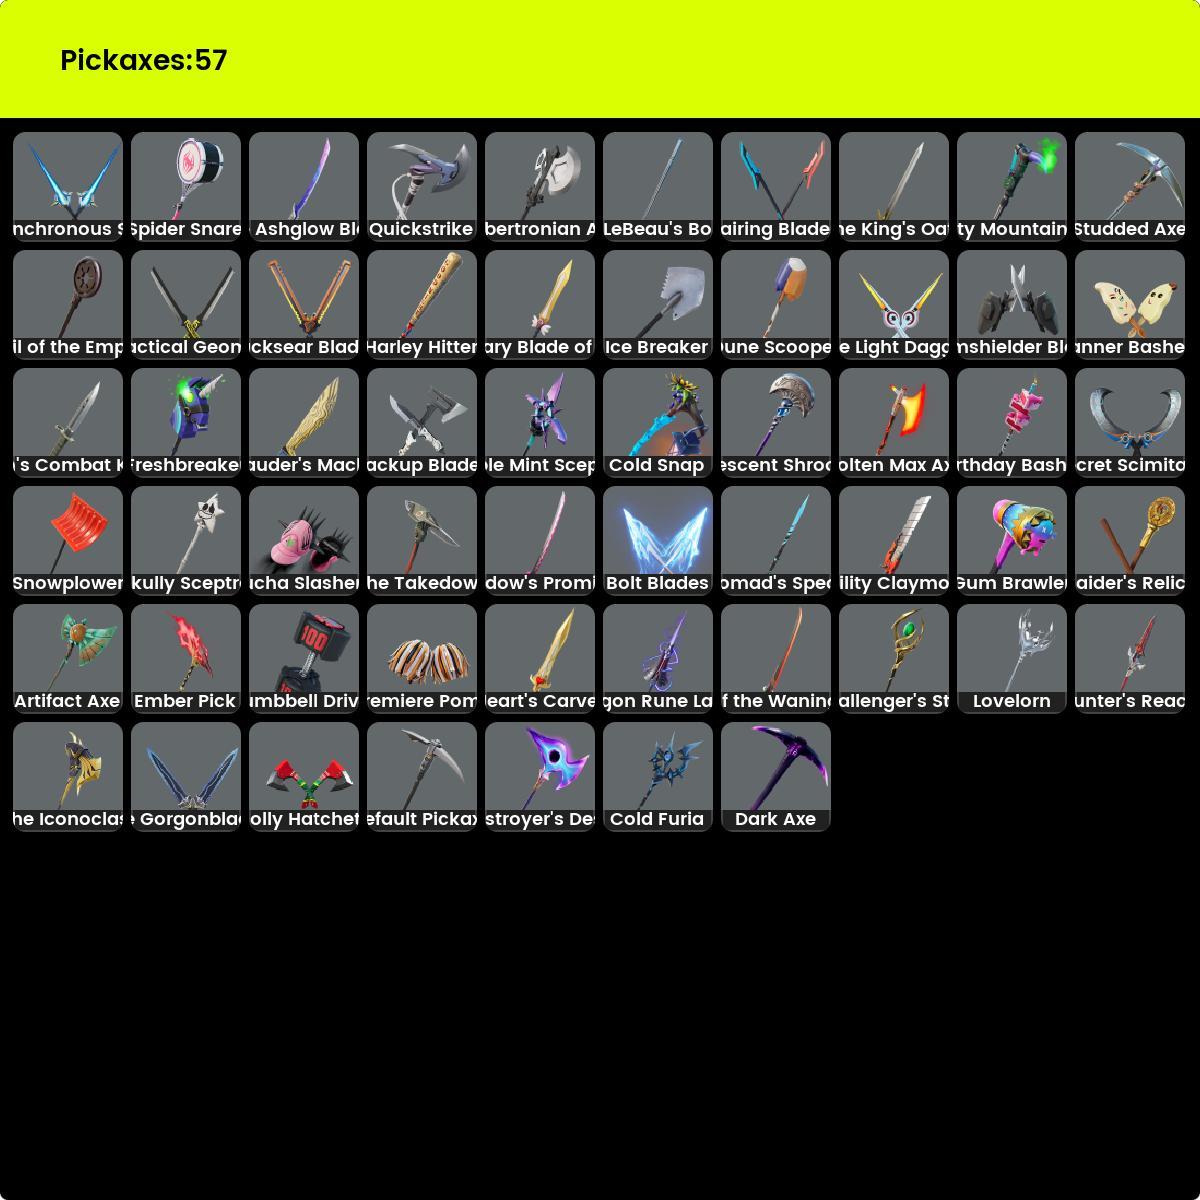 FULL ACCESS [PC/PSN] 38 skins, Polarity; Snap; Malik; Optimus Prime; Era; Dark Wild Card; Dark Jonesy; Dark Red Knight; 0 VB